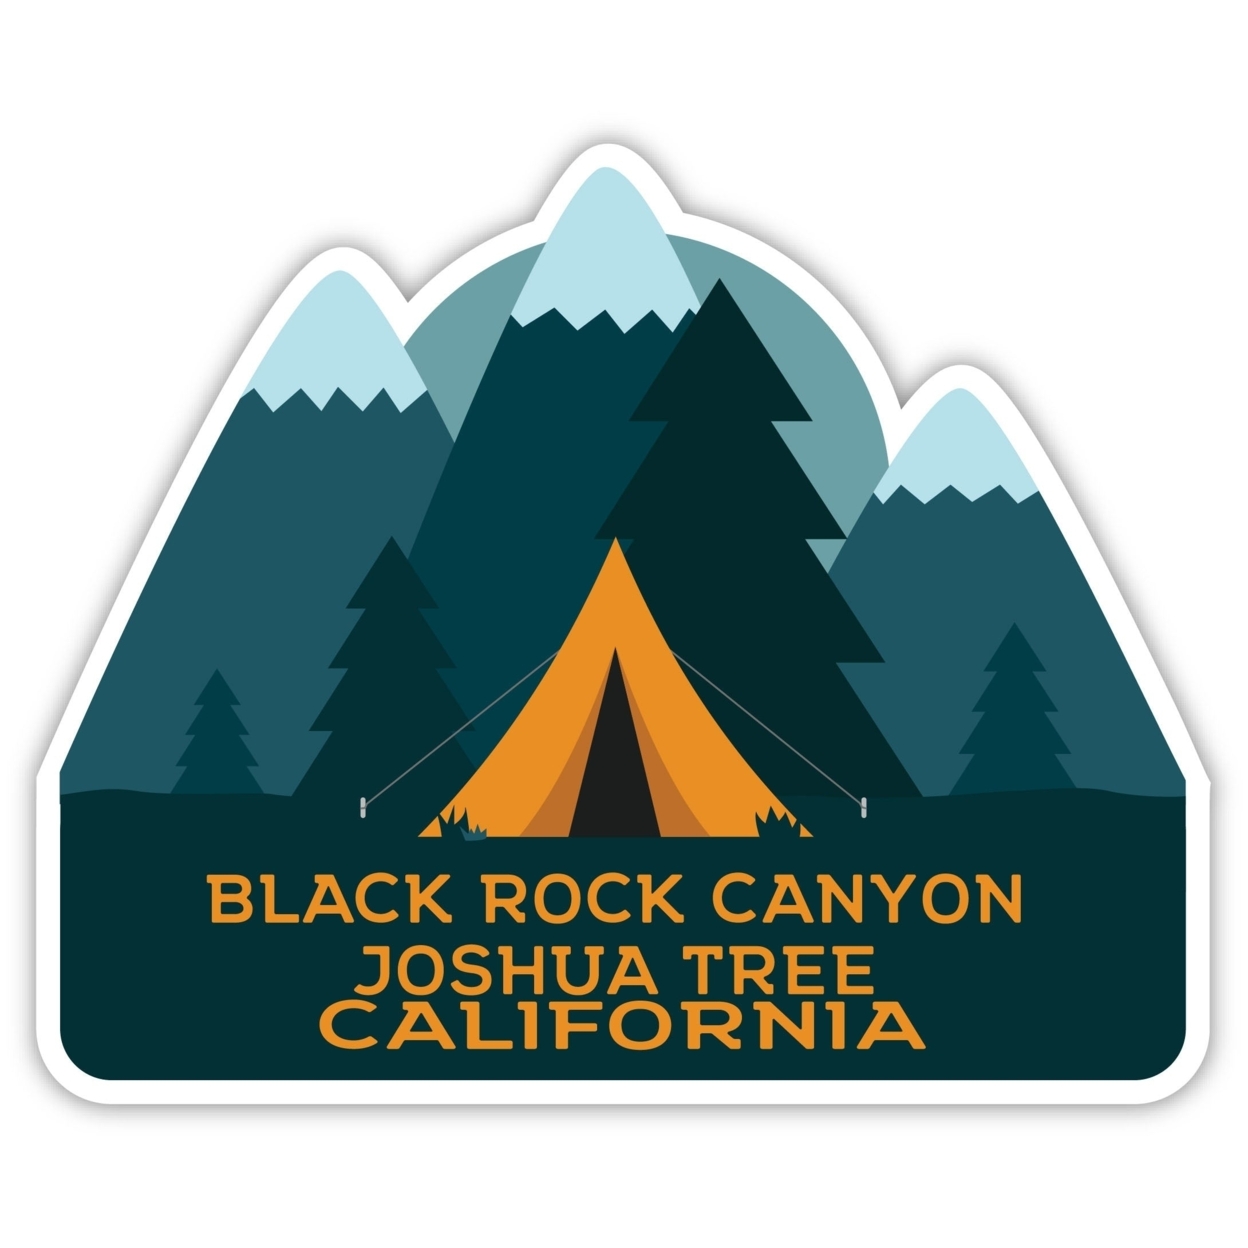 Black Rock Canyon Joshua Tree California Souvenir Decorative Stickers (Choose Theme And Size) - 4-Pack, 8-Inch, Bear